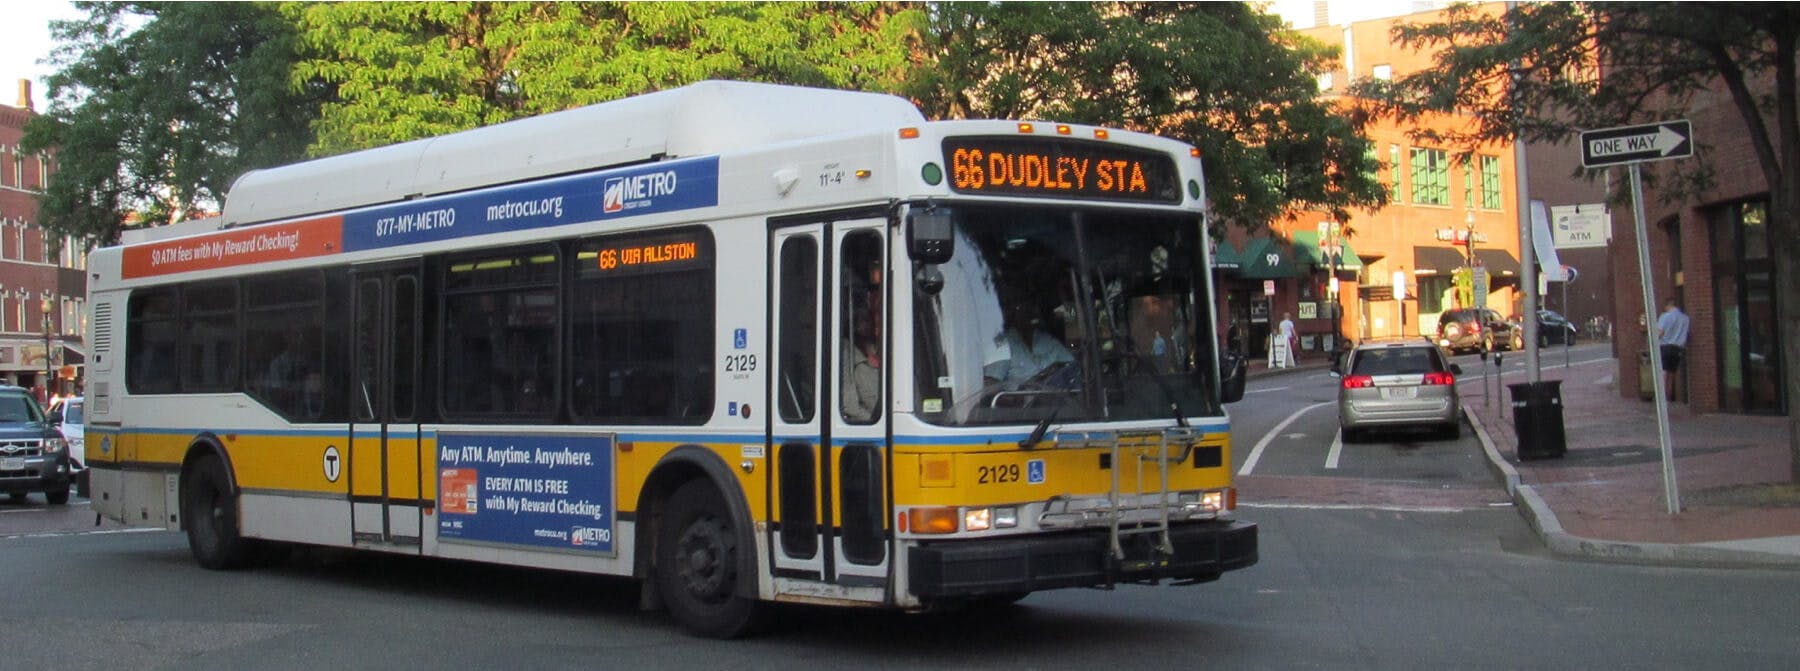 Massachusetts Bay Transportation Authority (MBTA) - Image